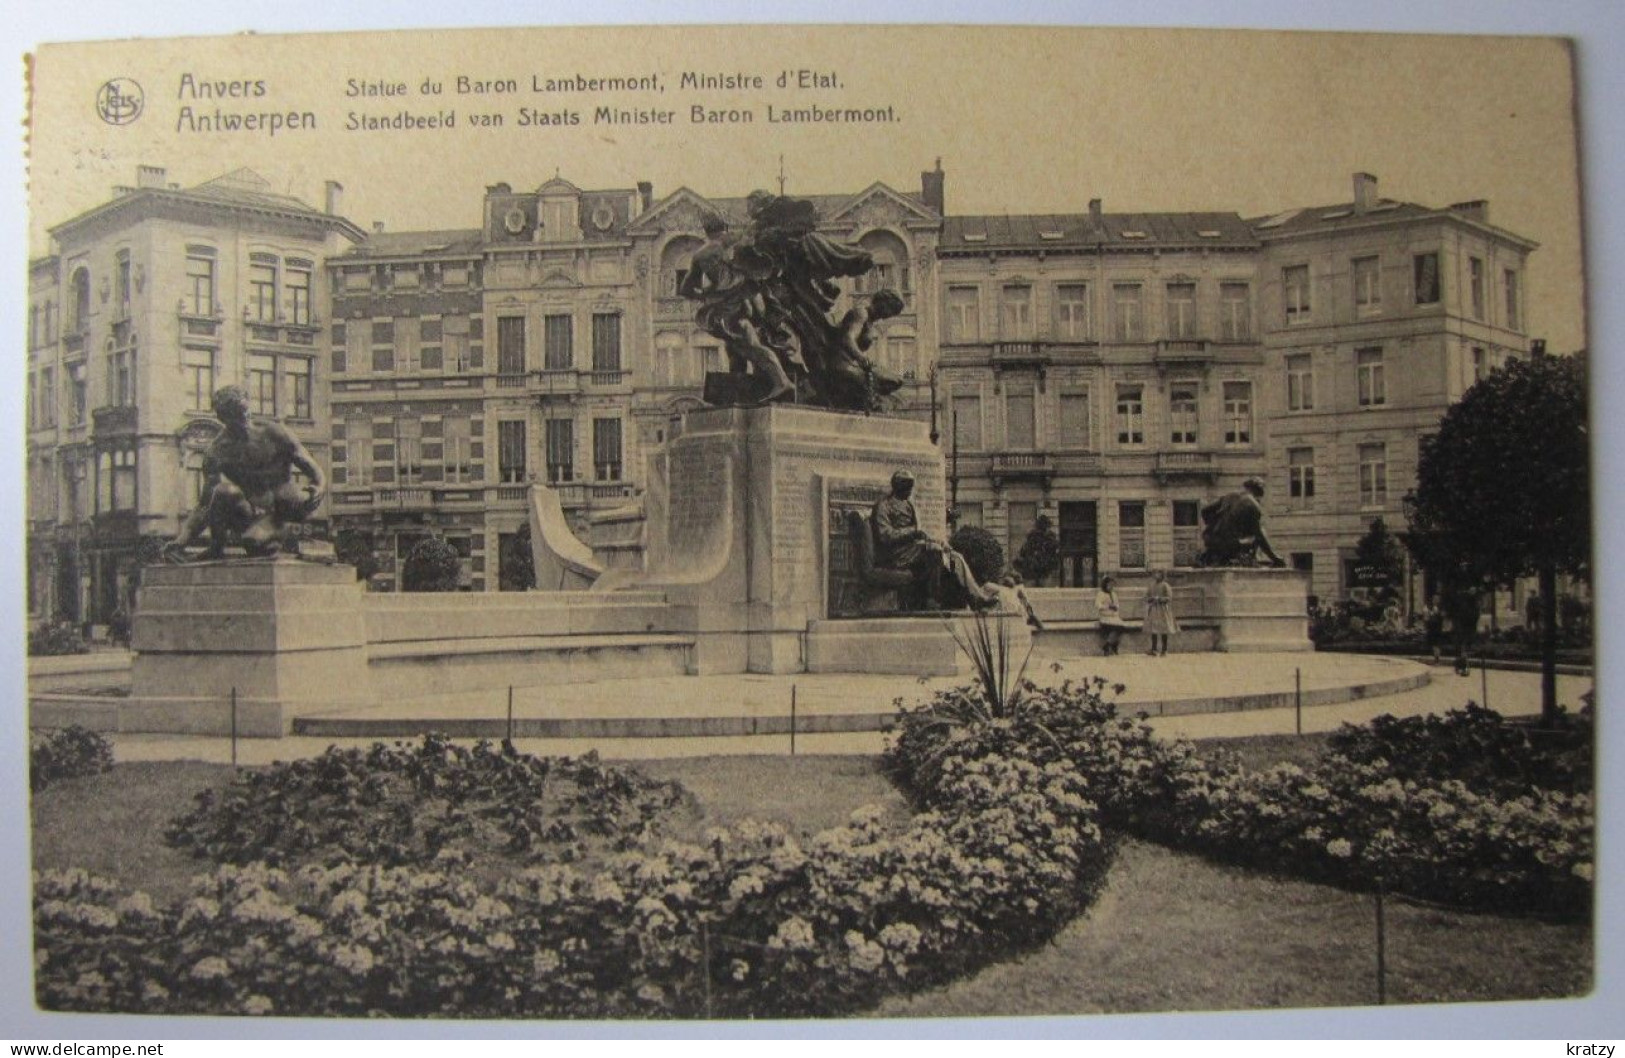 BELGIQUE - ANVERS - ANTWERPEN - Statue Du Baron Lambermont, Ministre D'Etat - 1928 - Antwerpen